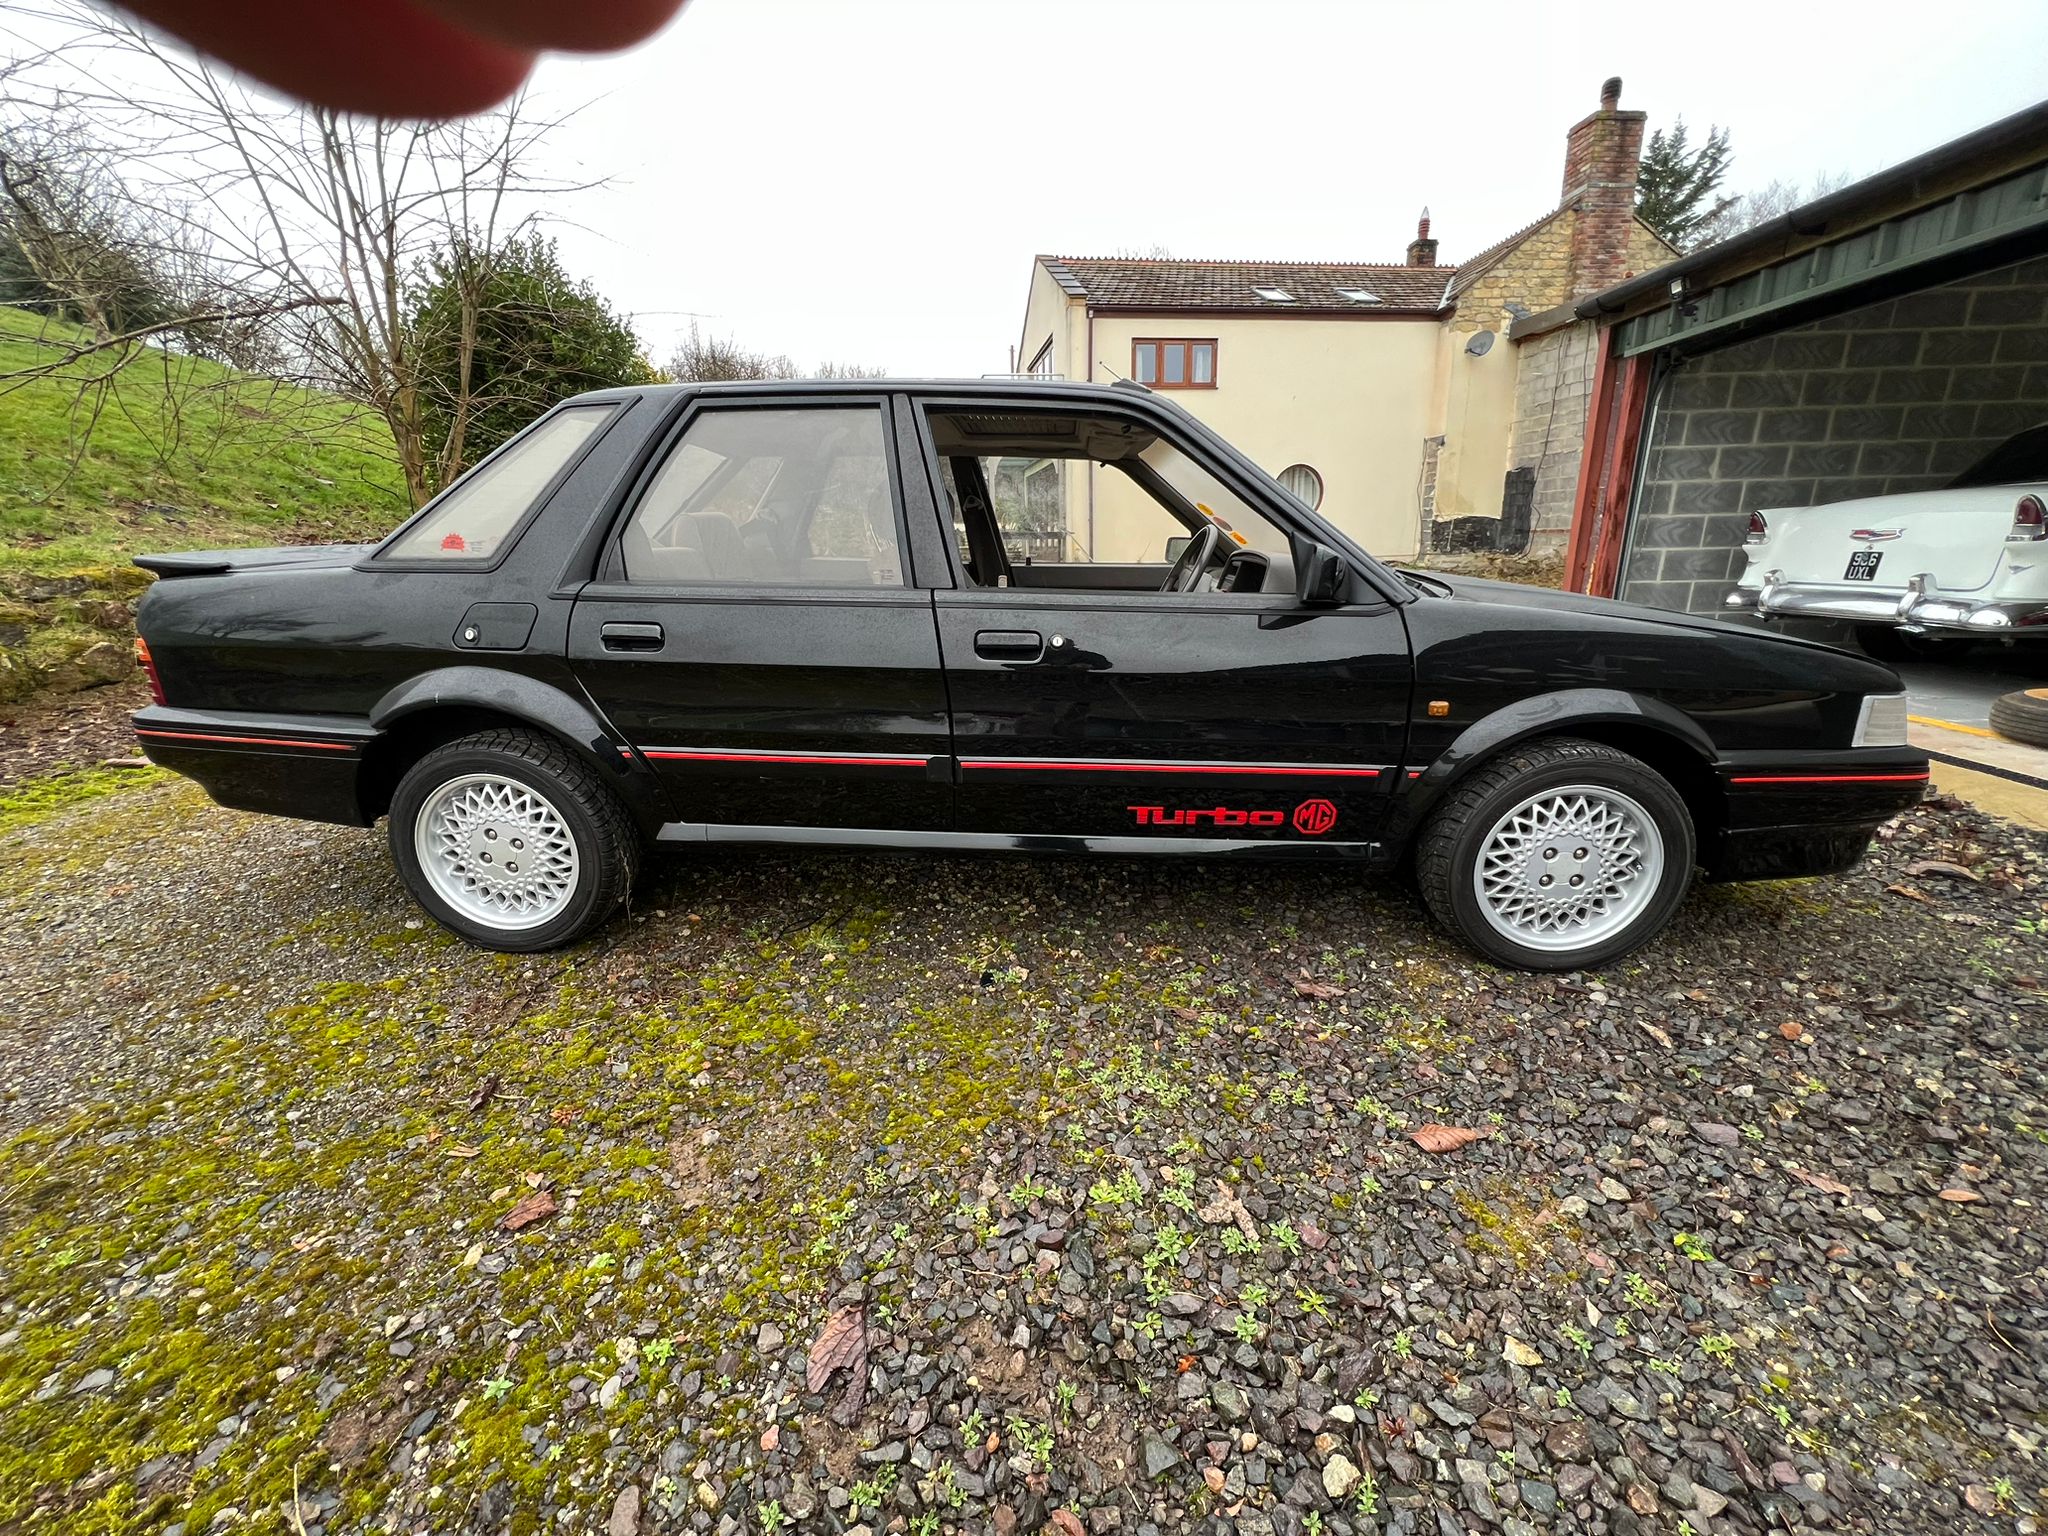 MG Montego Turbo 1988 - Image 5 of 14